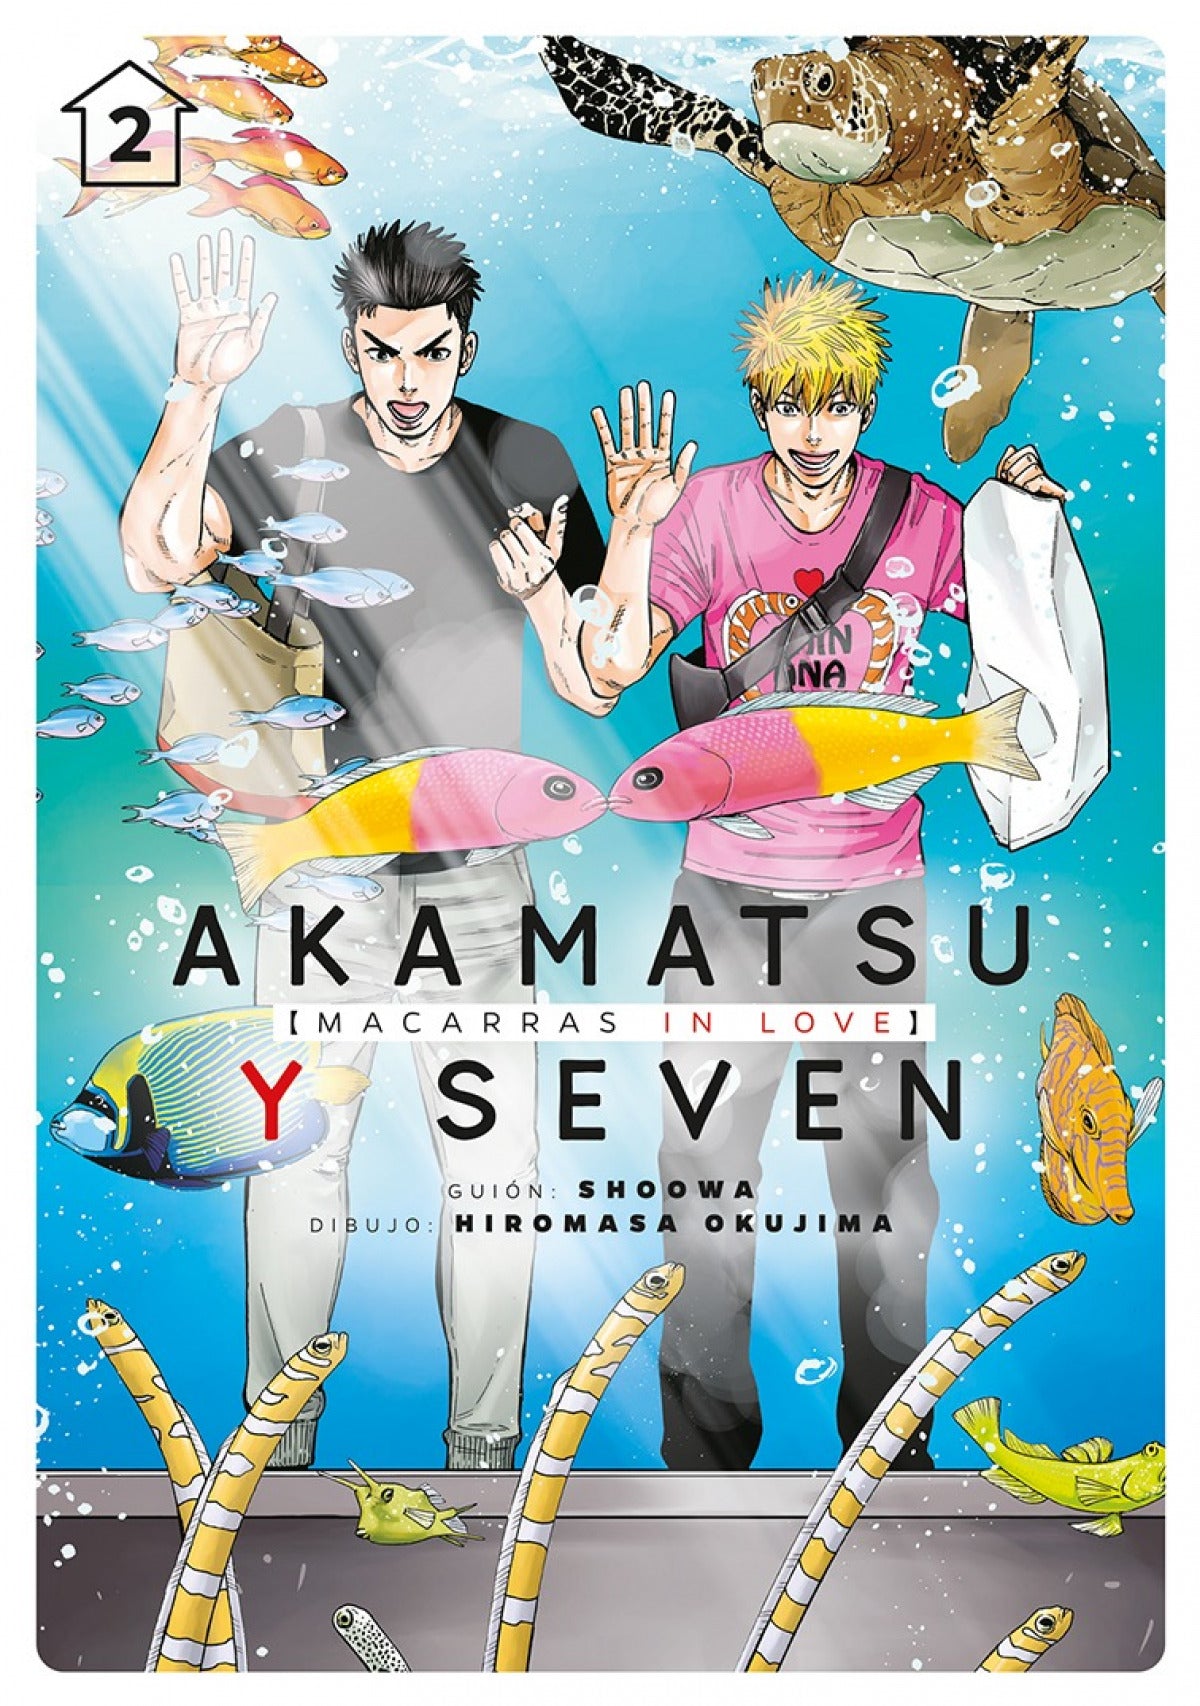 Akamatsu y Seven, macarras in love, vol. 2 de SHOOWA